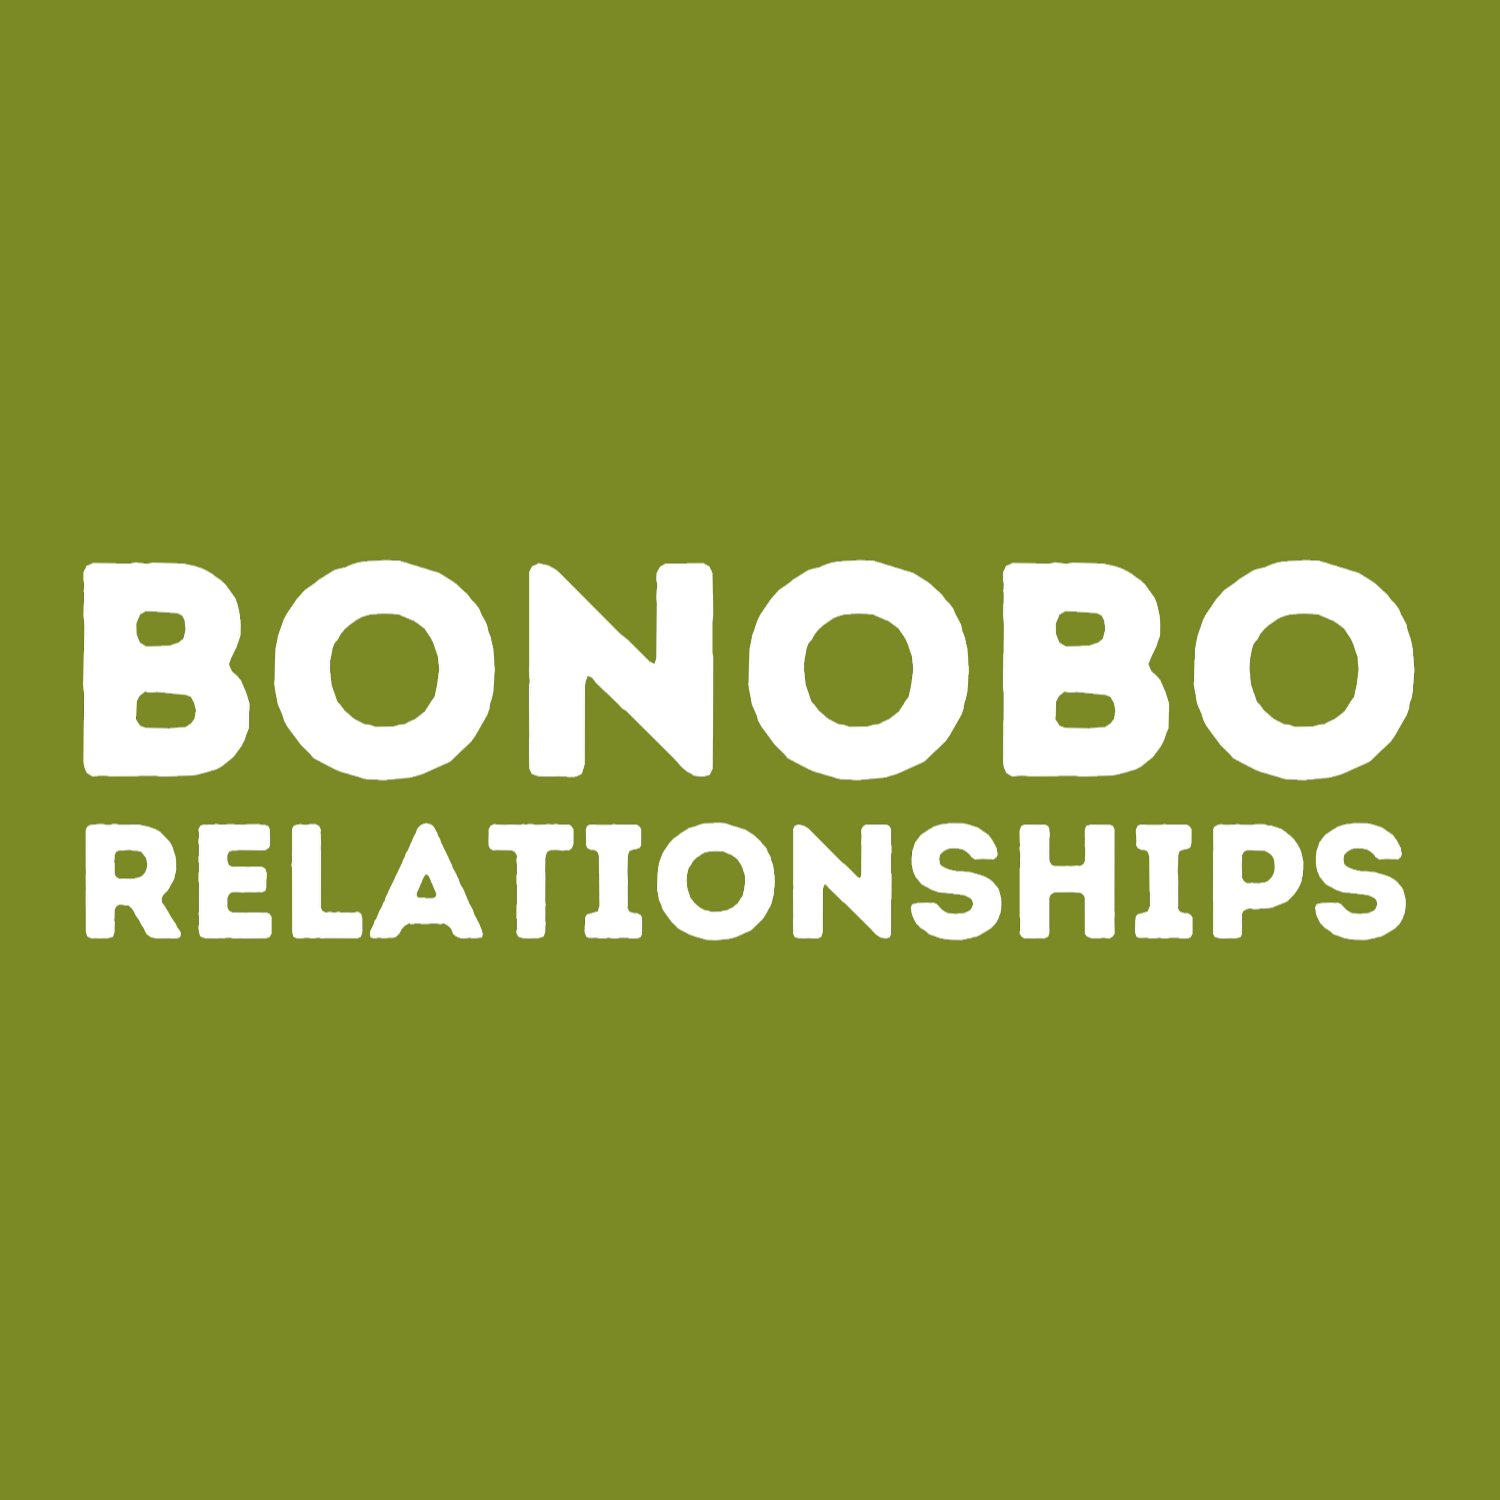 Molly Reagh - Bonobo Relationships  - Famm - LGBTQ Coach.jpg